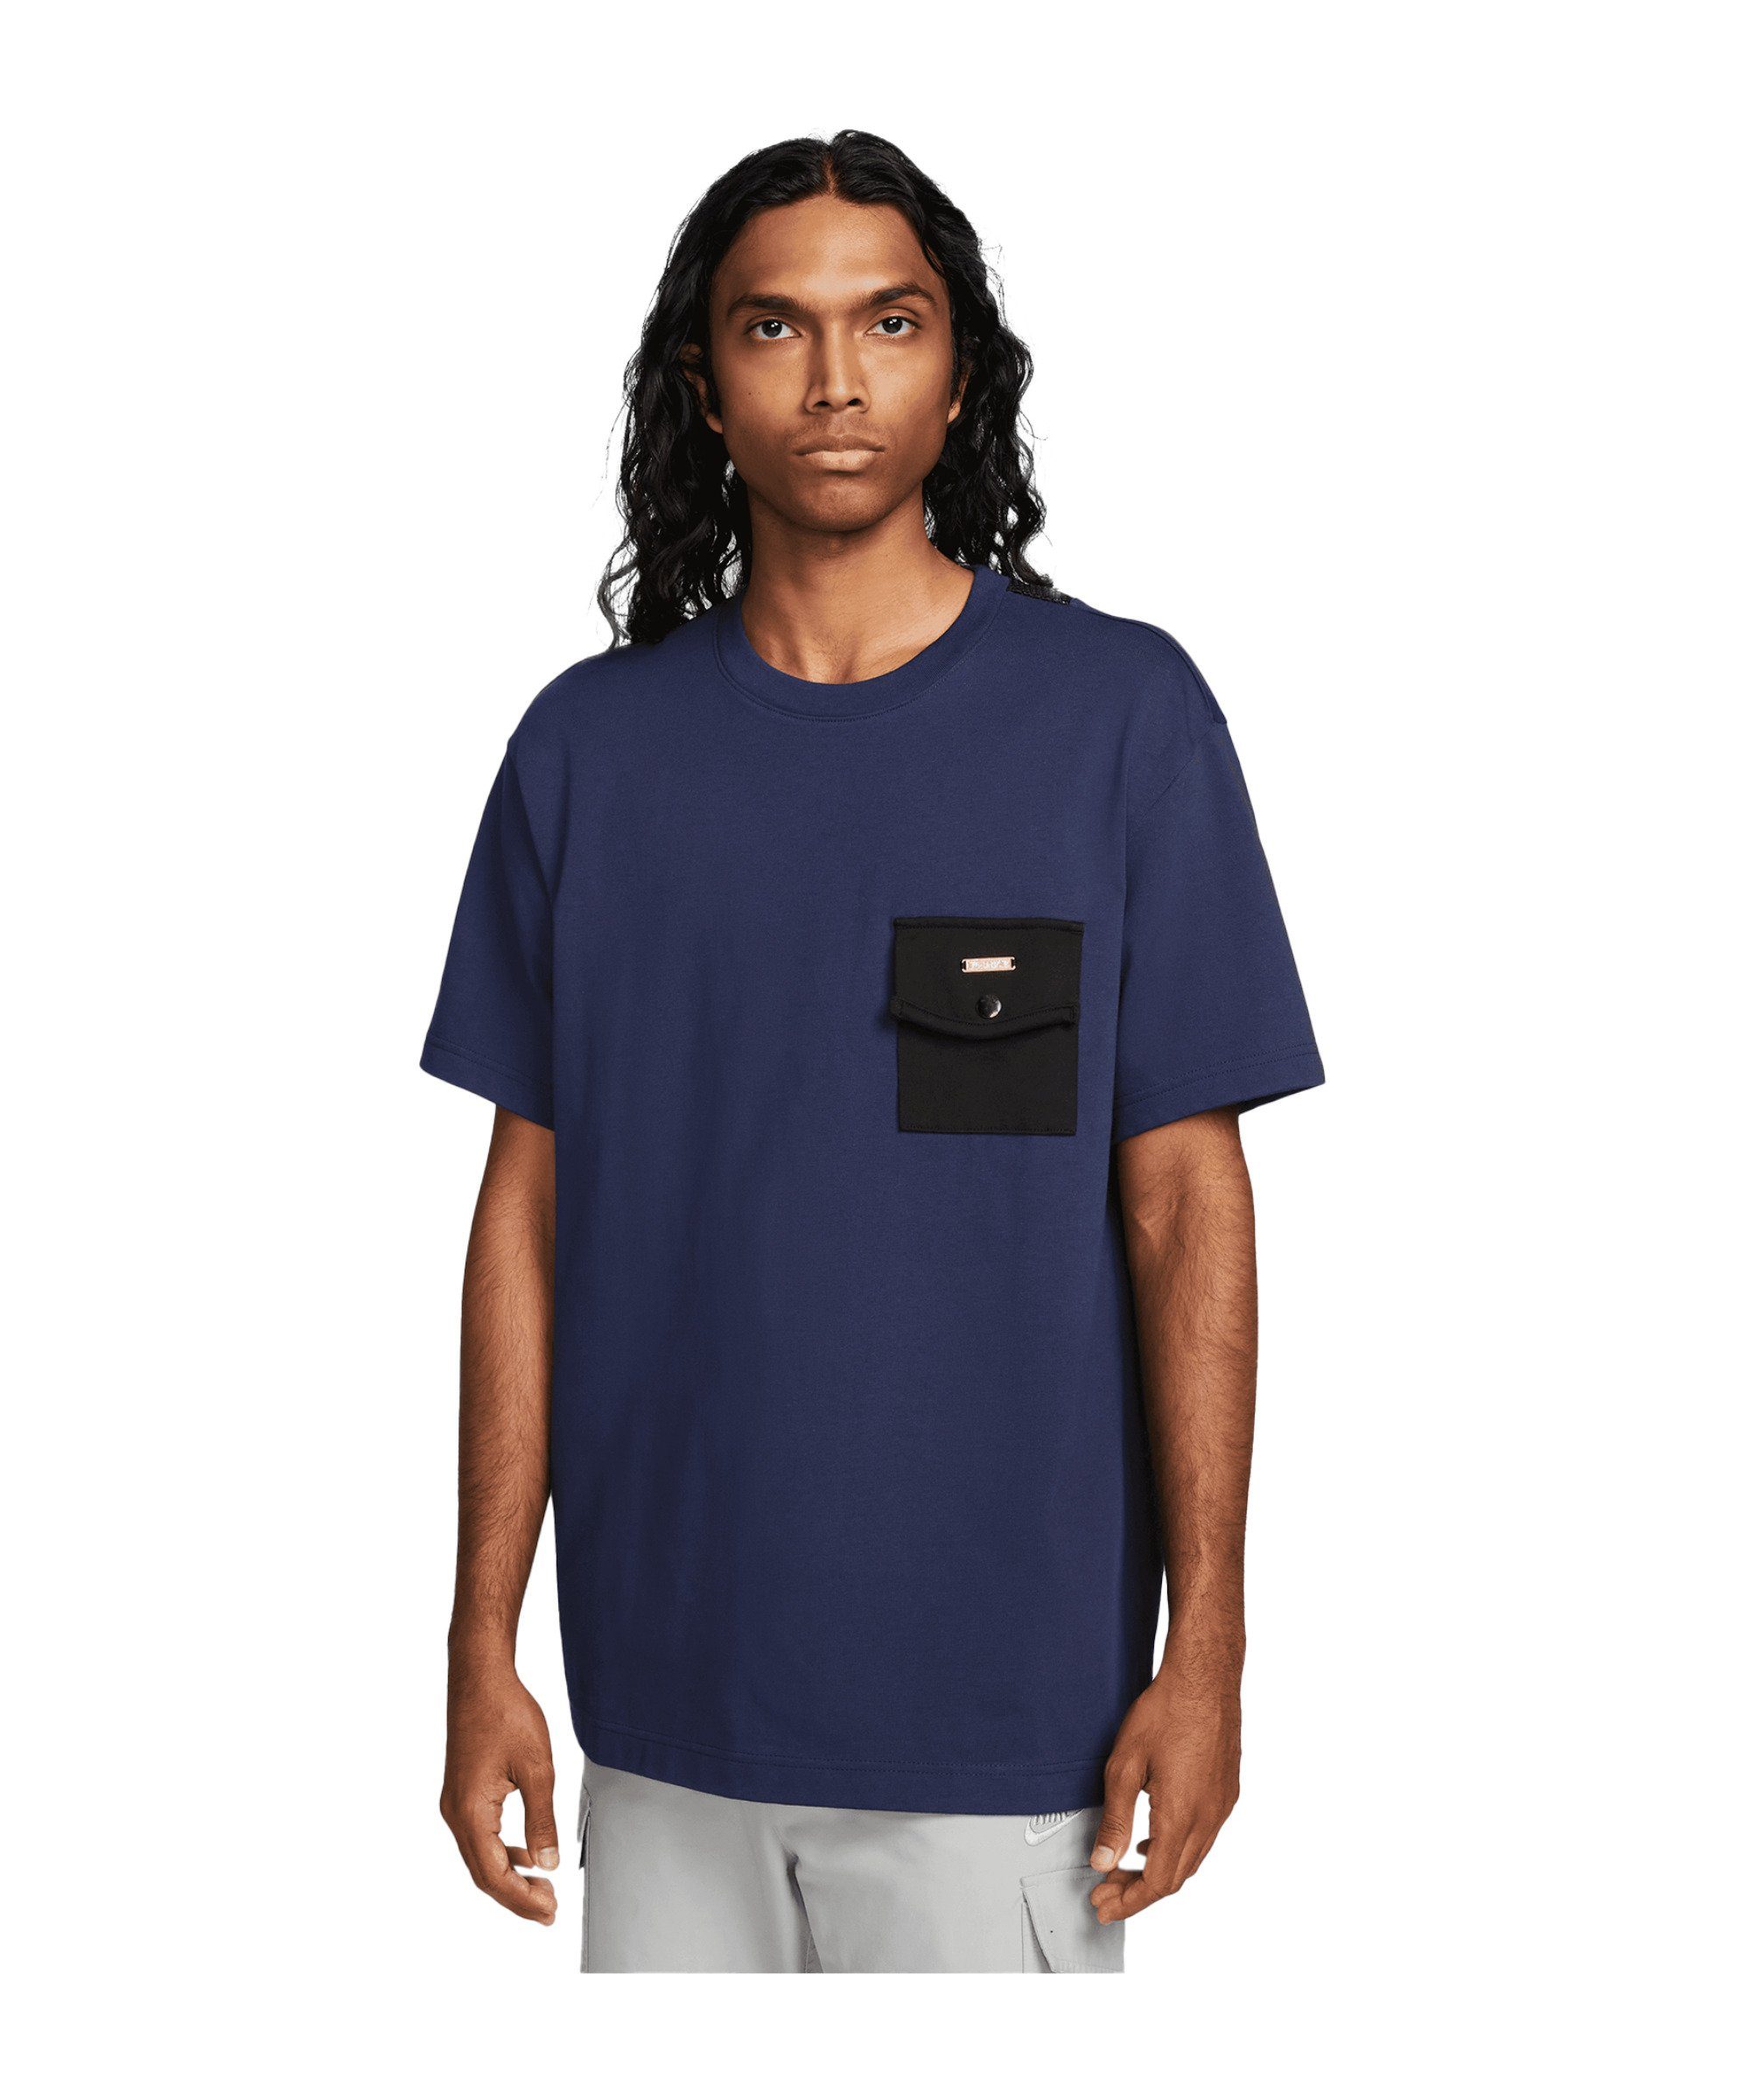 Nike T-Shirt Frankreich T-Shirt default